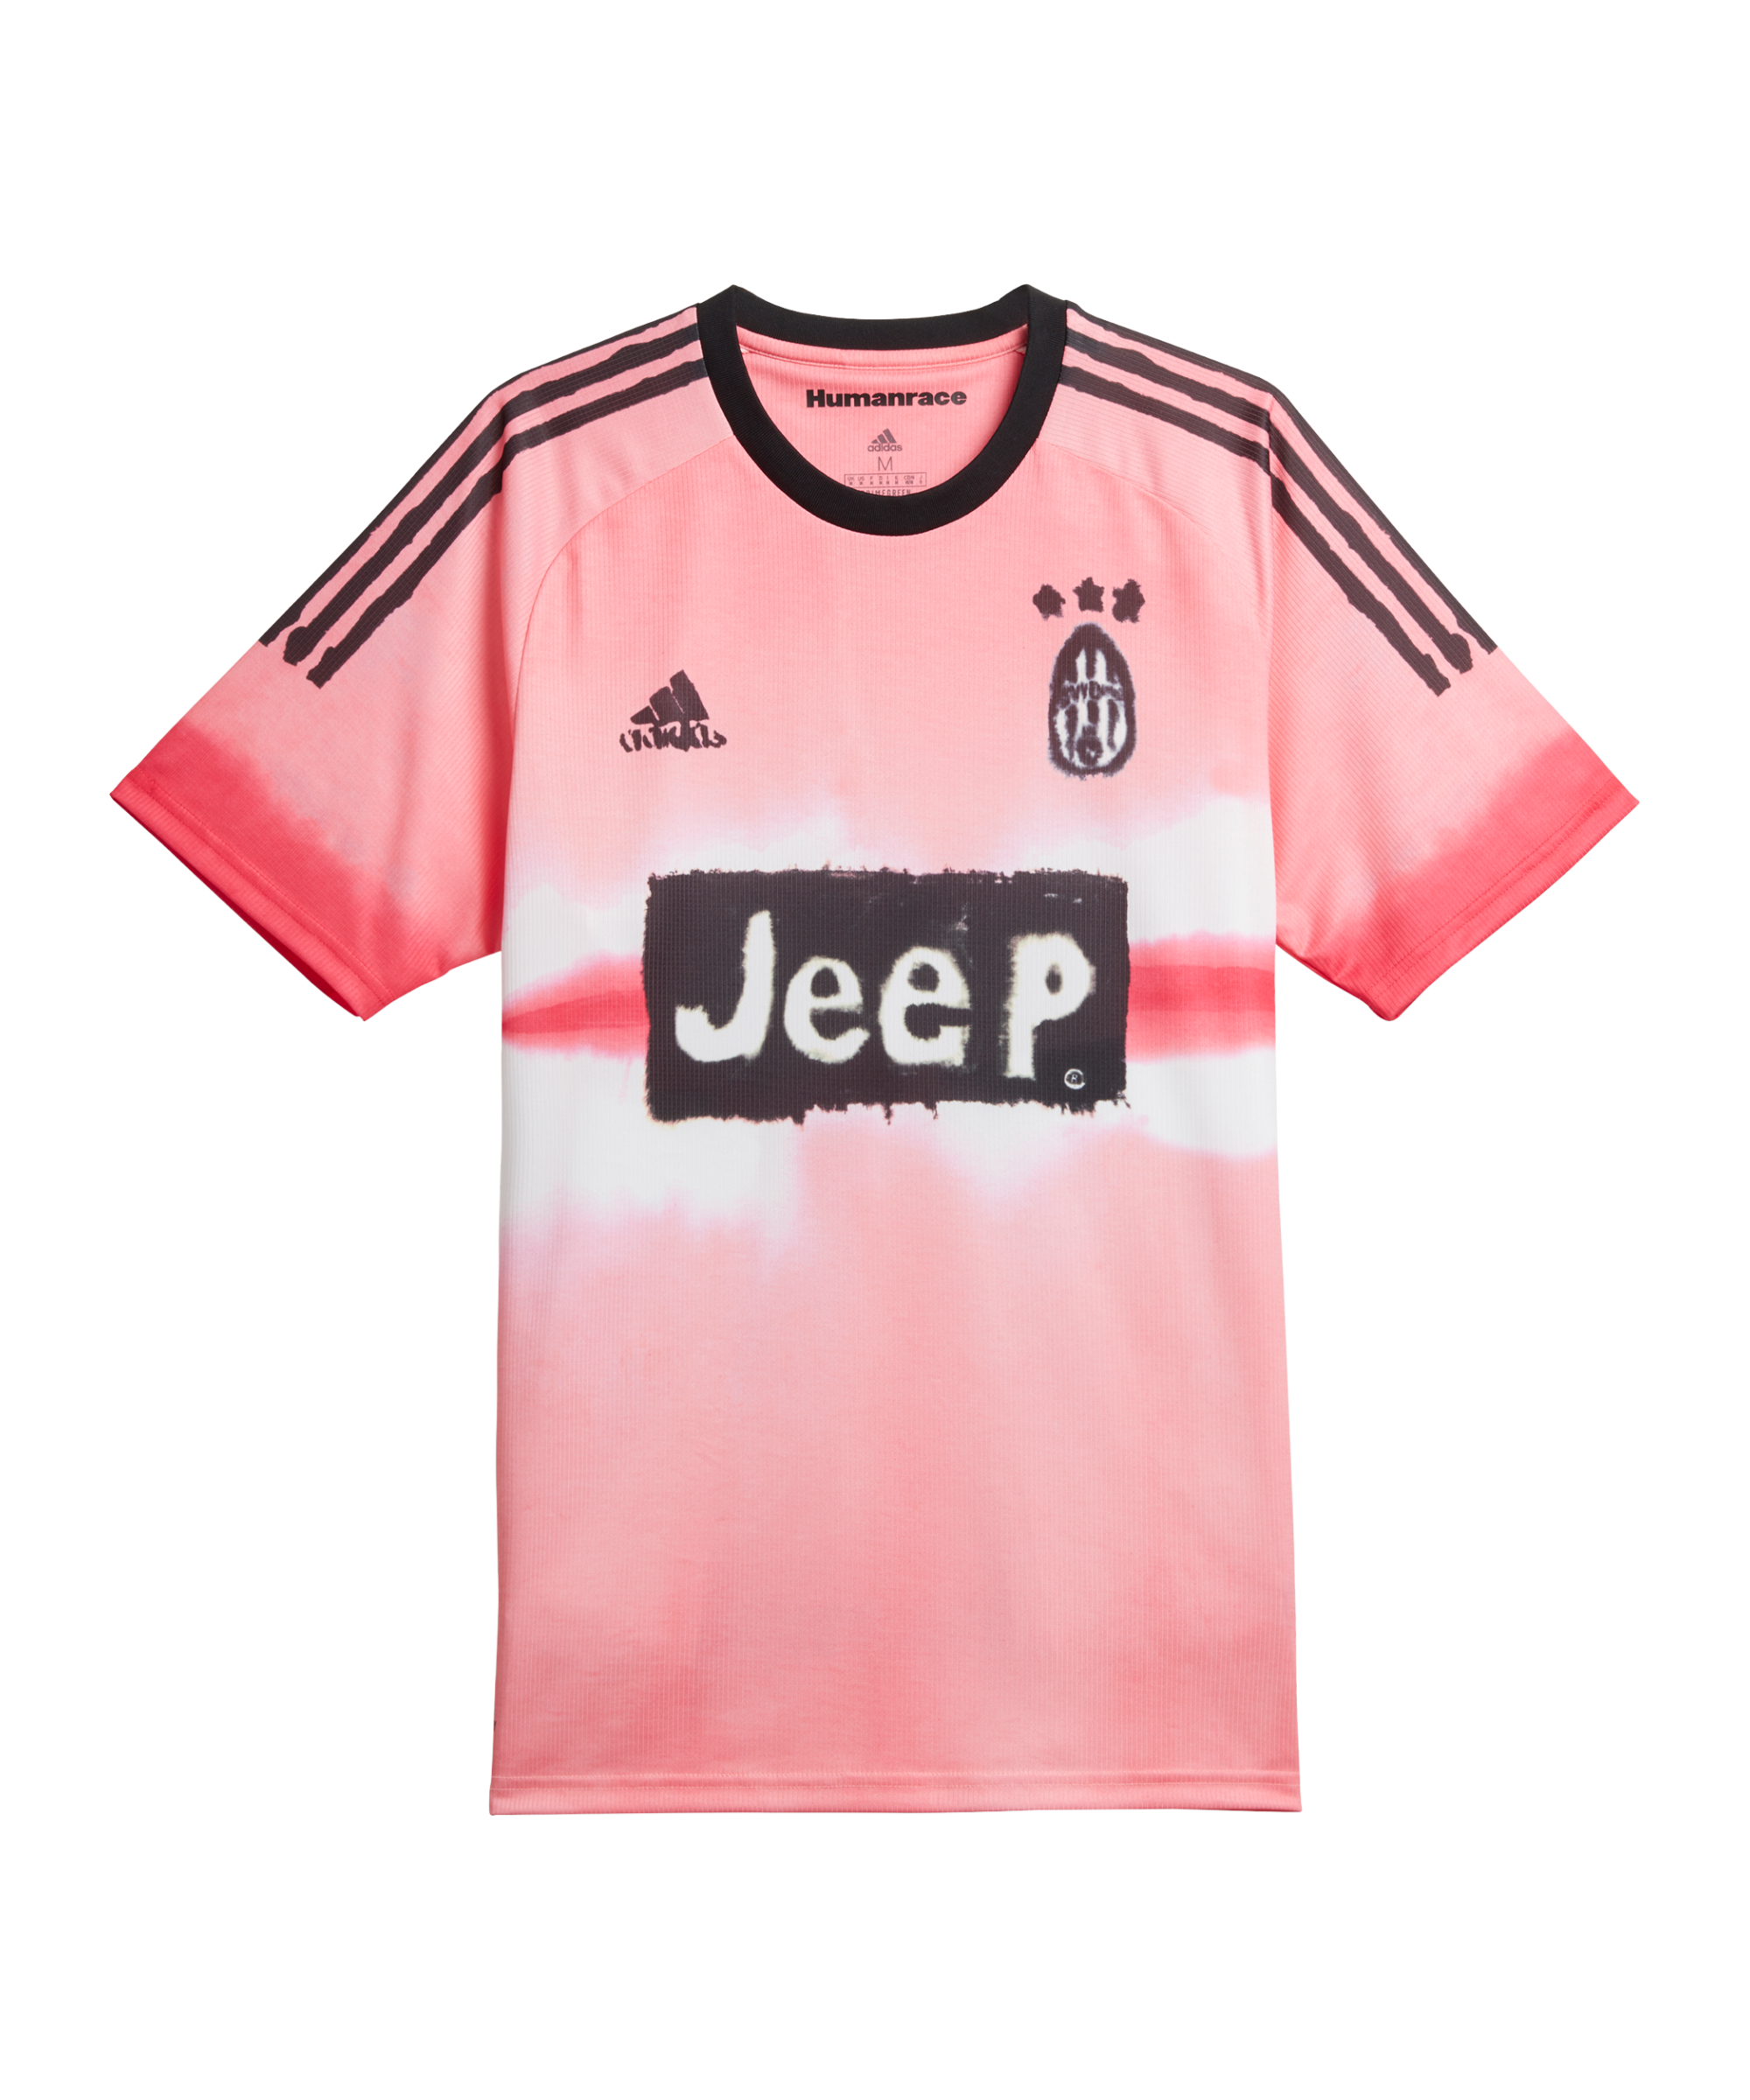 Mellow Oxide Spelling adidas Juventus Turin Human Race Shirt - Black